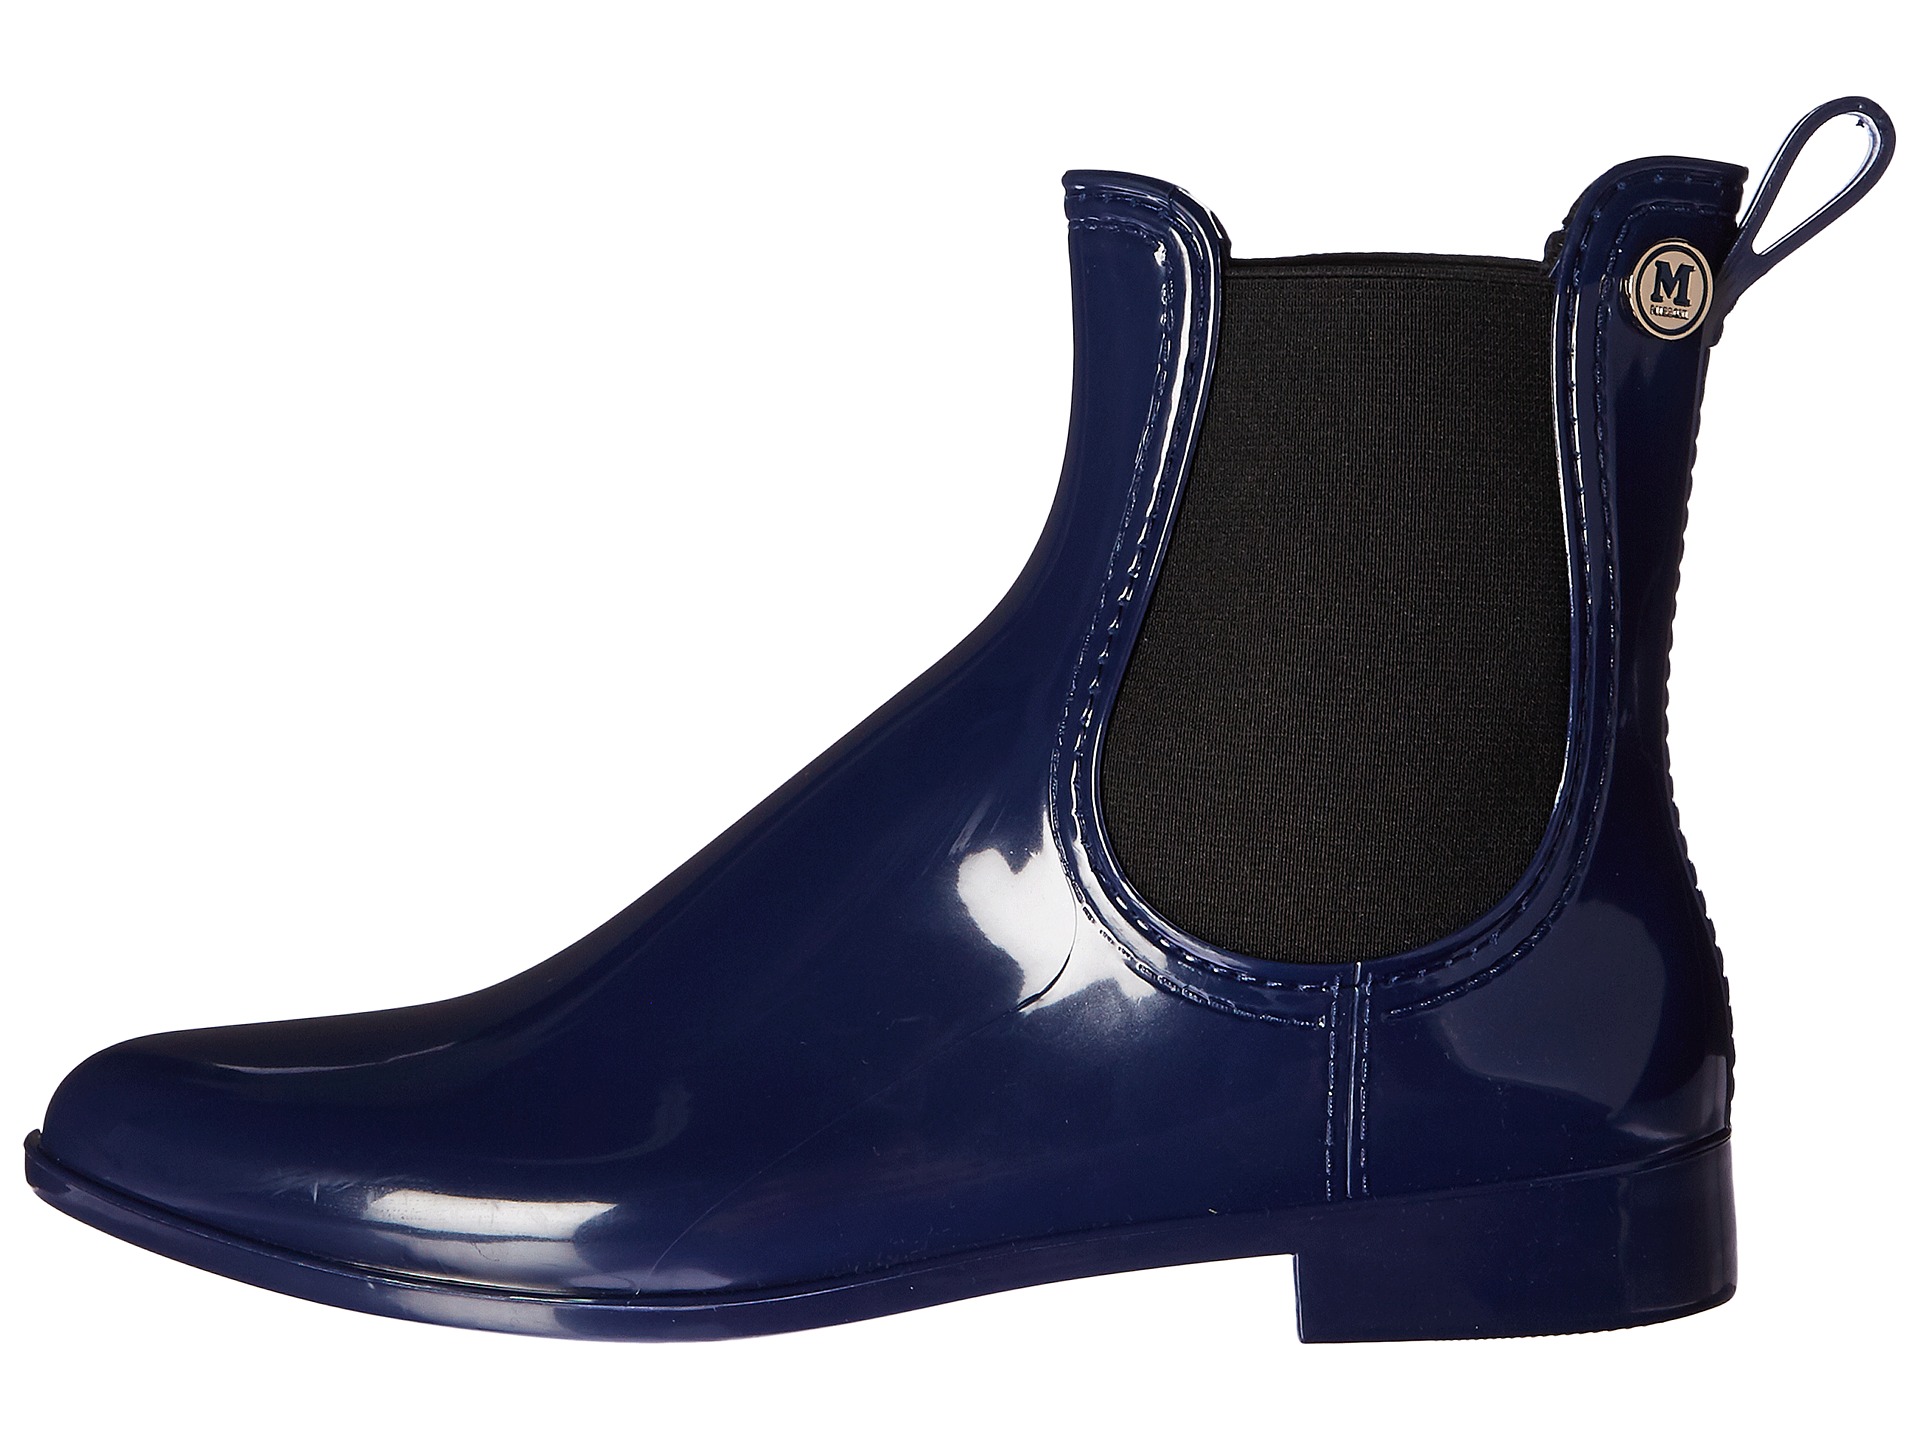 M Missoni Ankle Rain Boots Blue - Zappos.com Free Shipping BOTH Ways